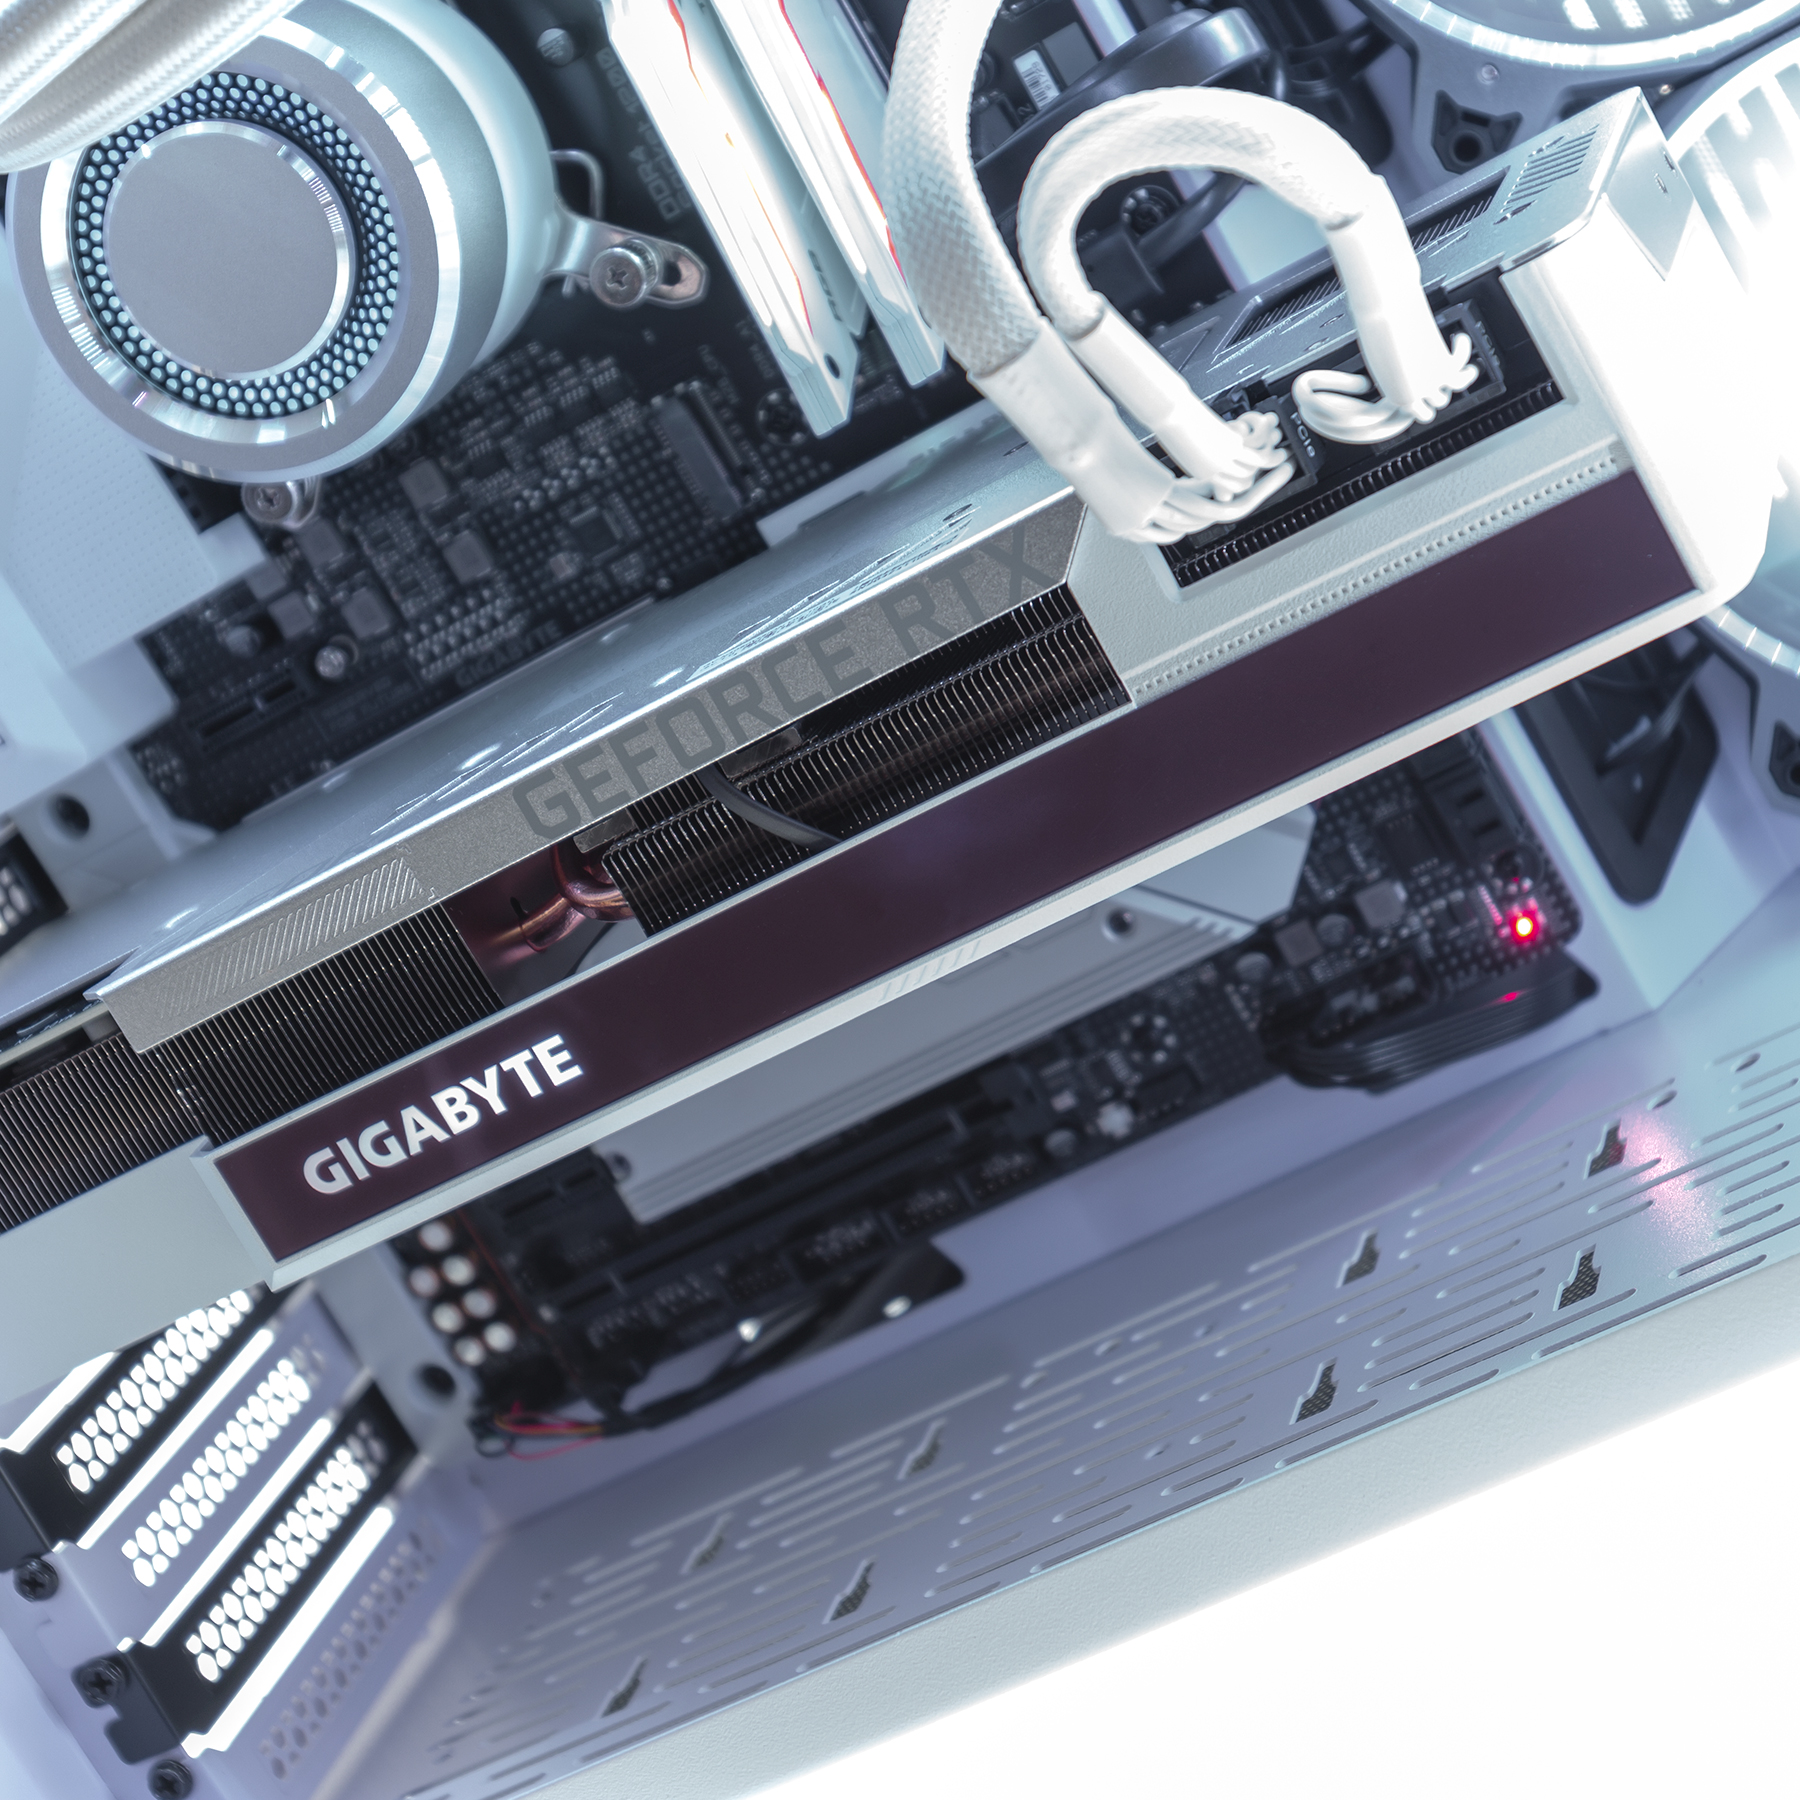  - OcUK Gaming Glacier - Gigabyte Vision, RTX 3000 Series Gaming PC